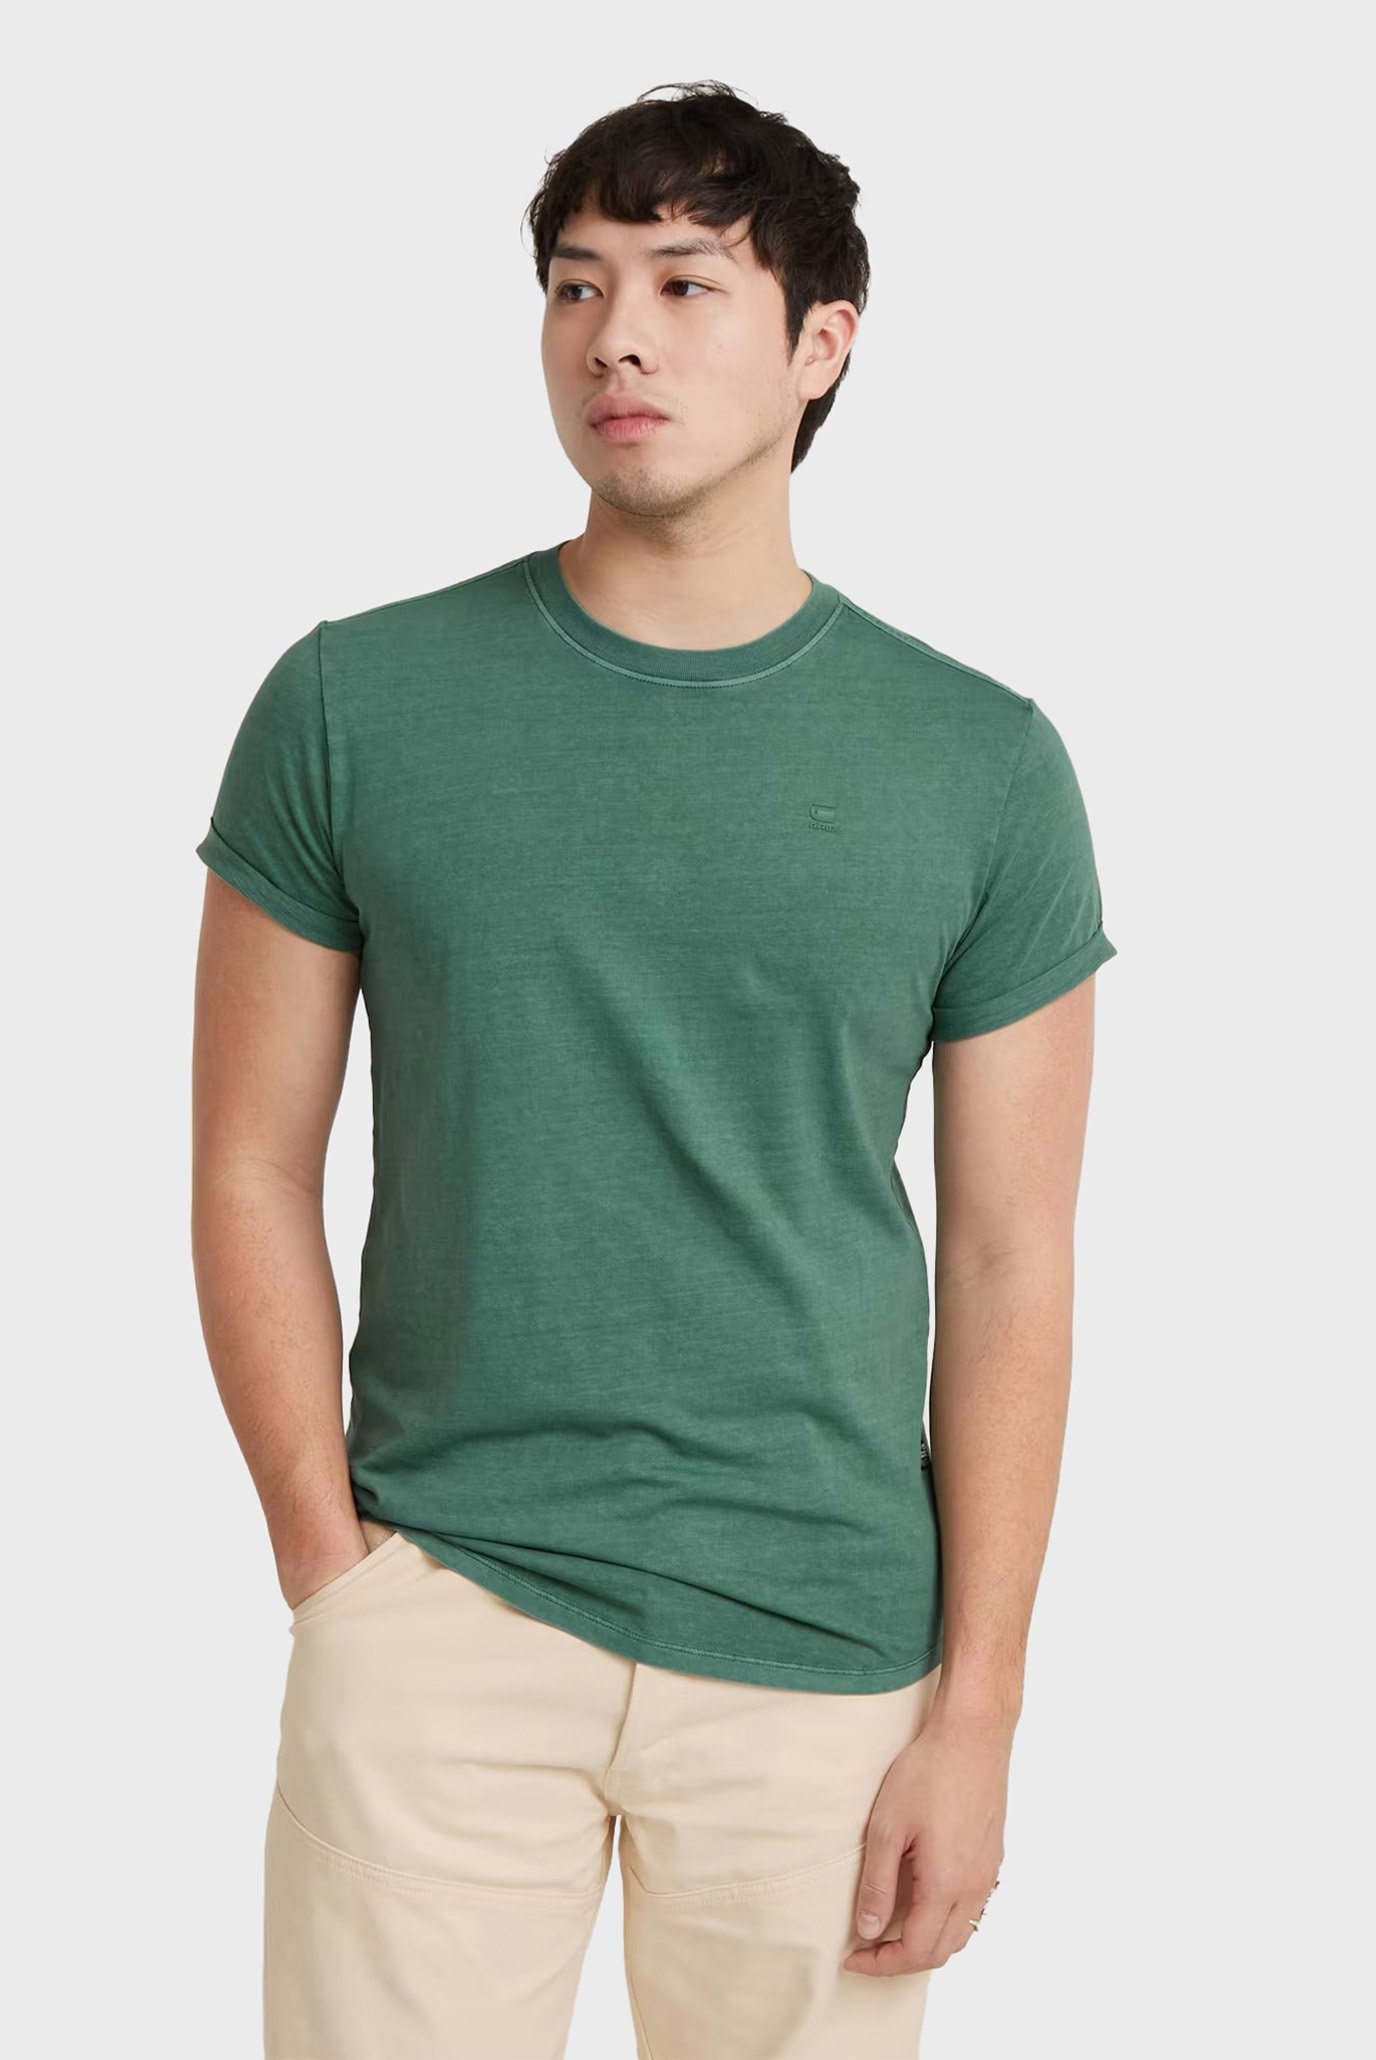 Мужская зеленая футболка Lash r t s/s 1